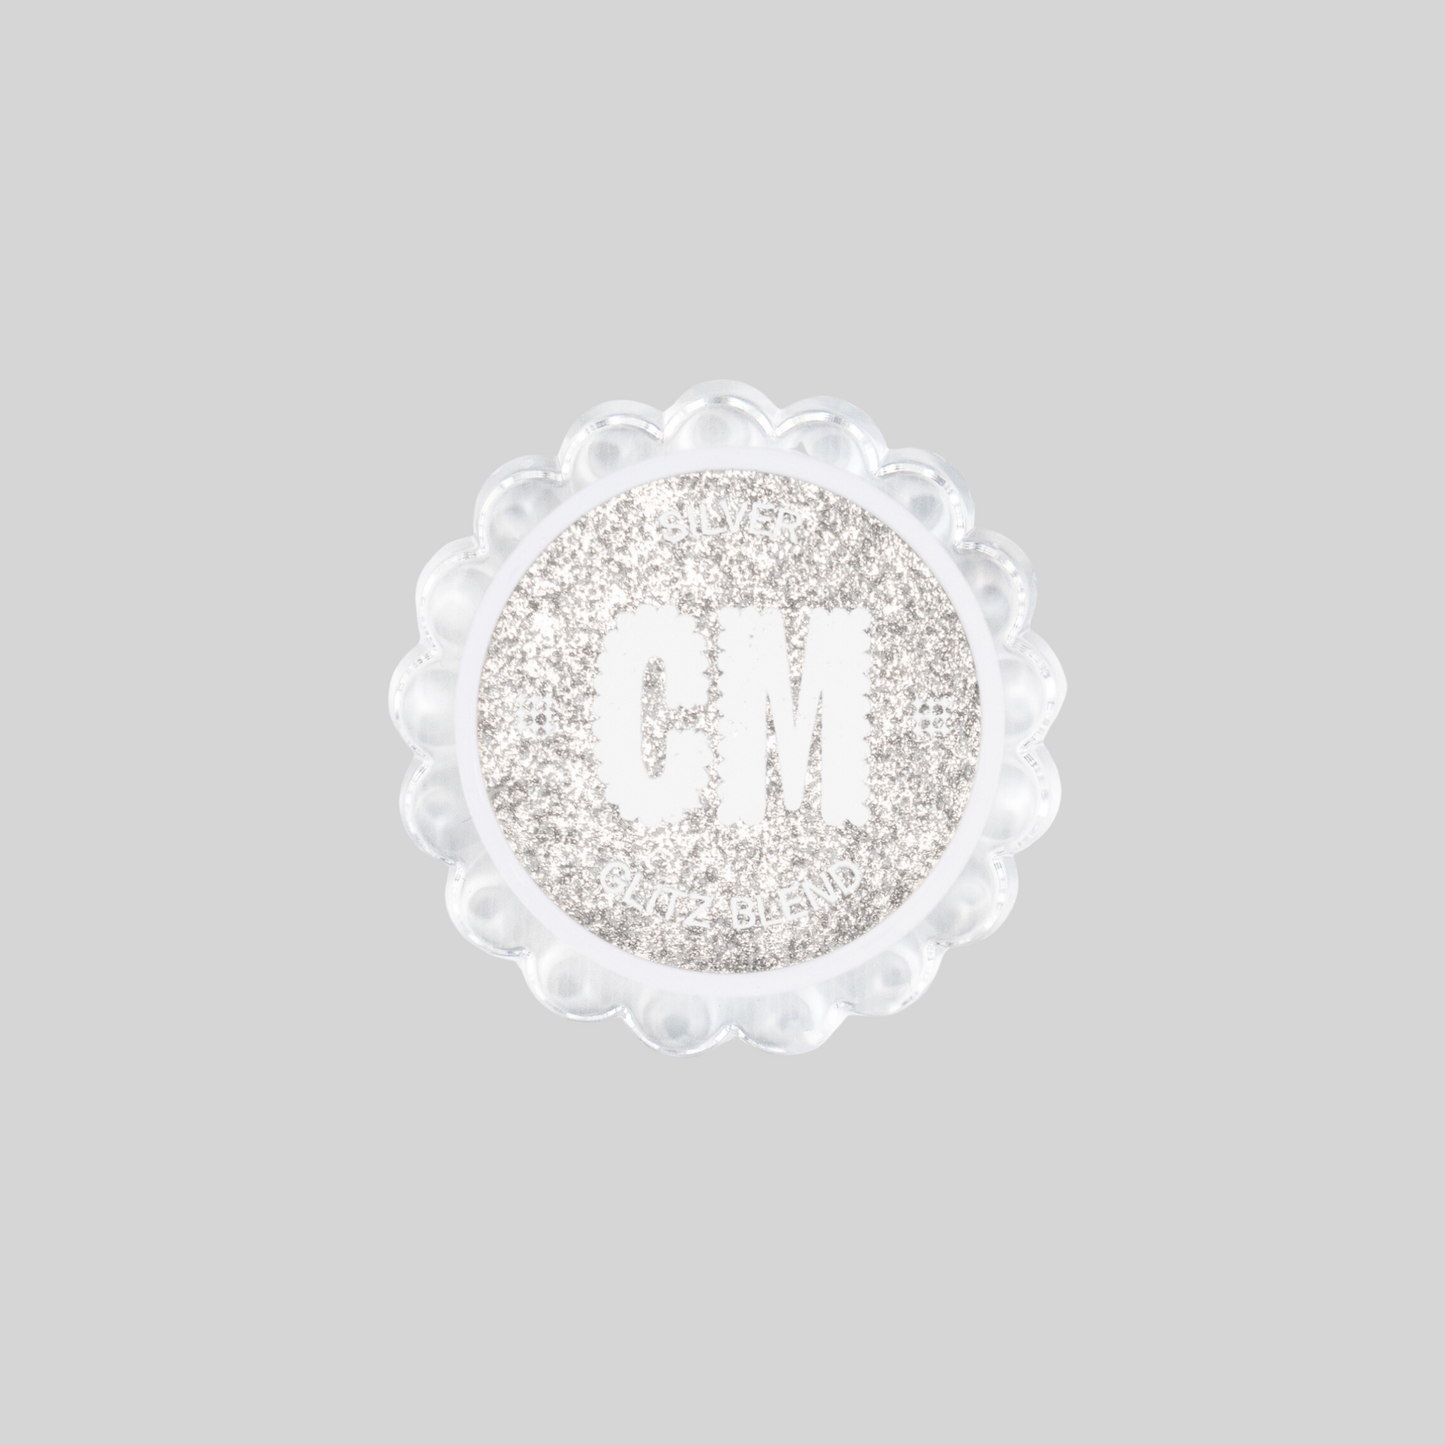 Colour Mill Glitz Blend Silver (10ml) - Lustre Dust